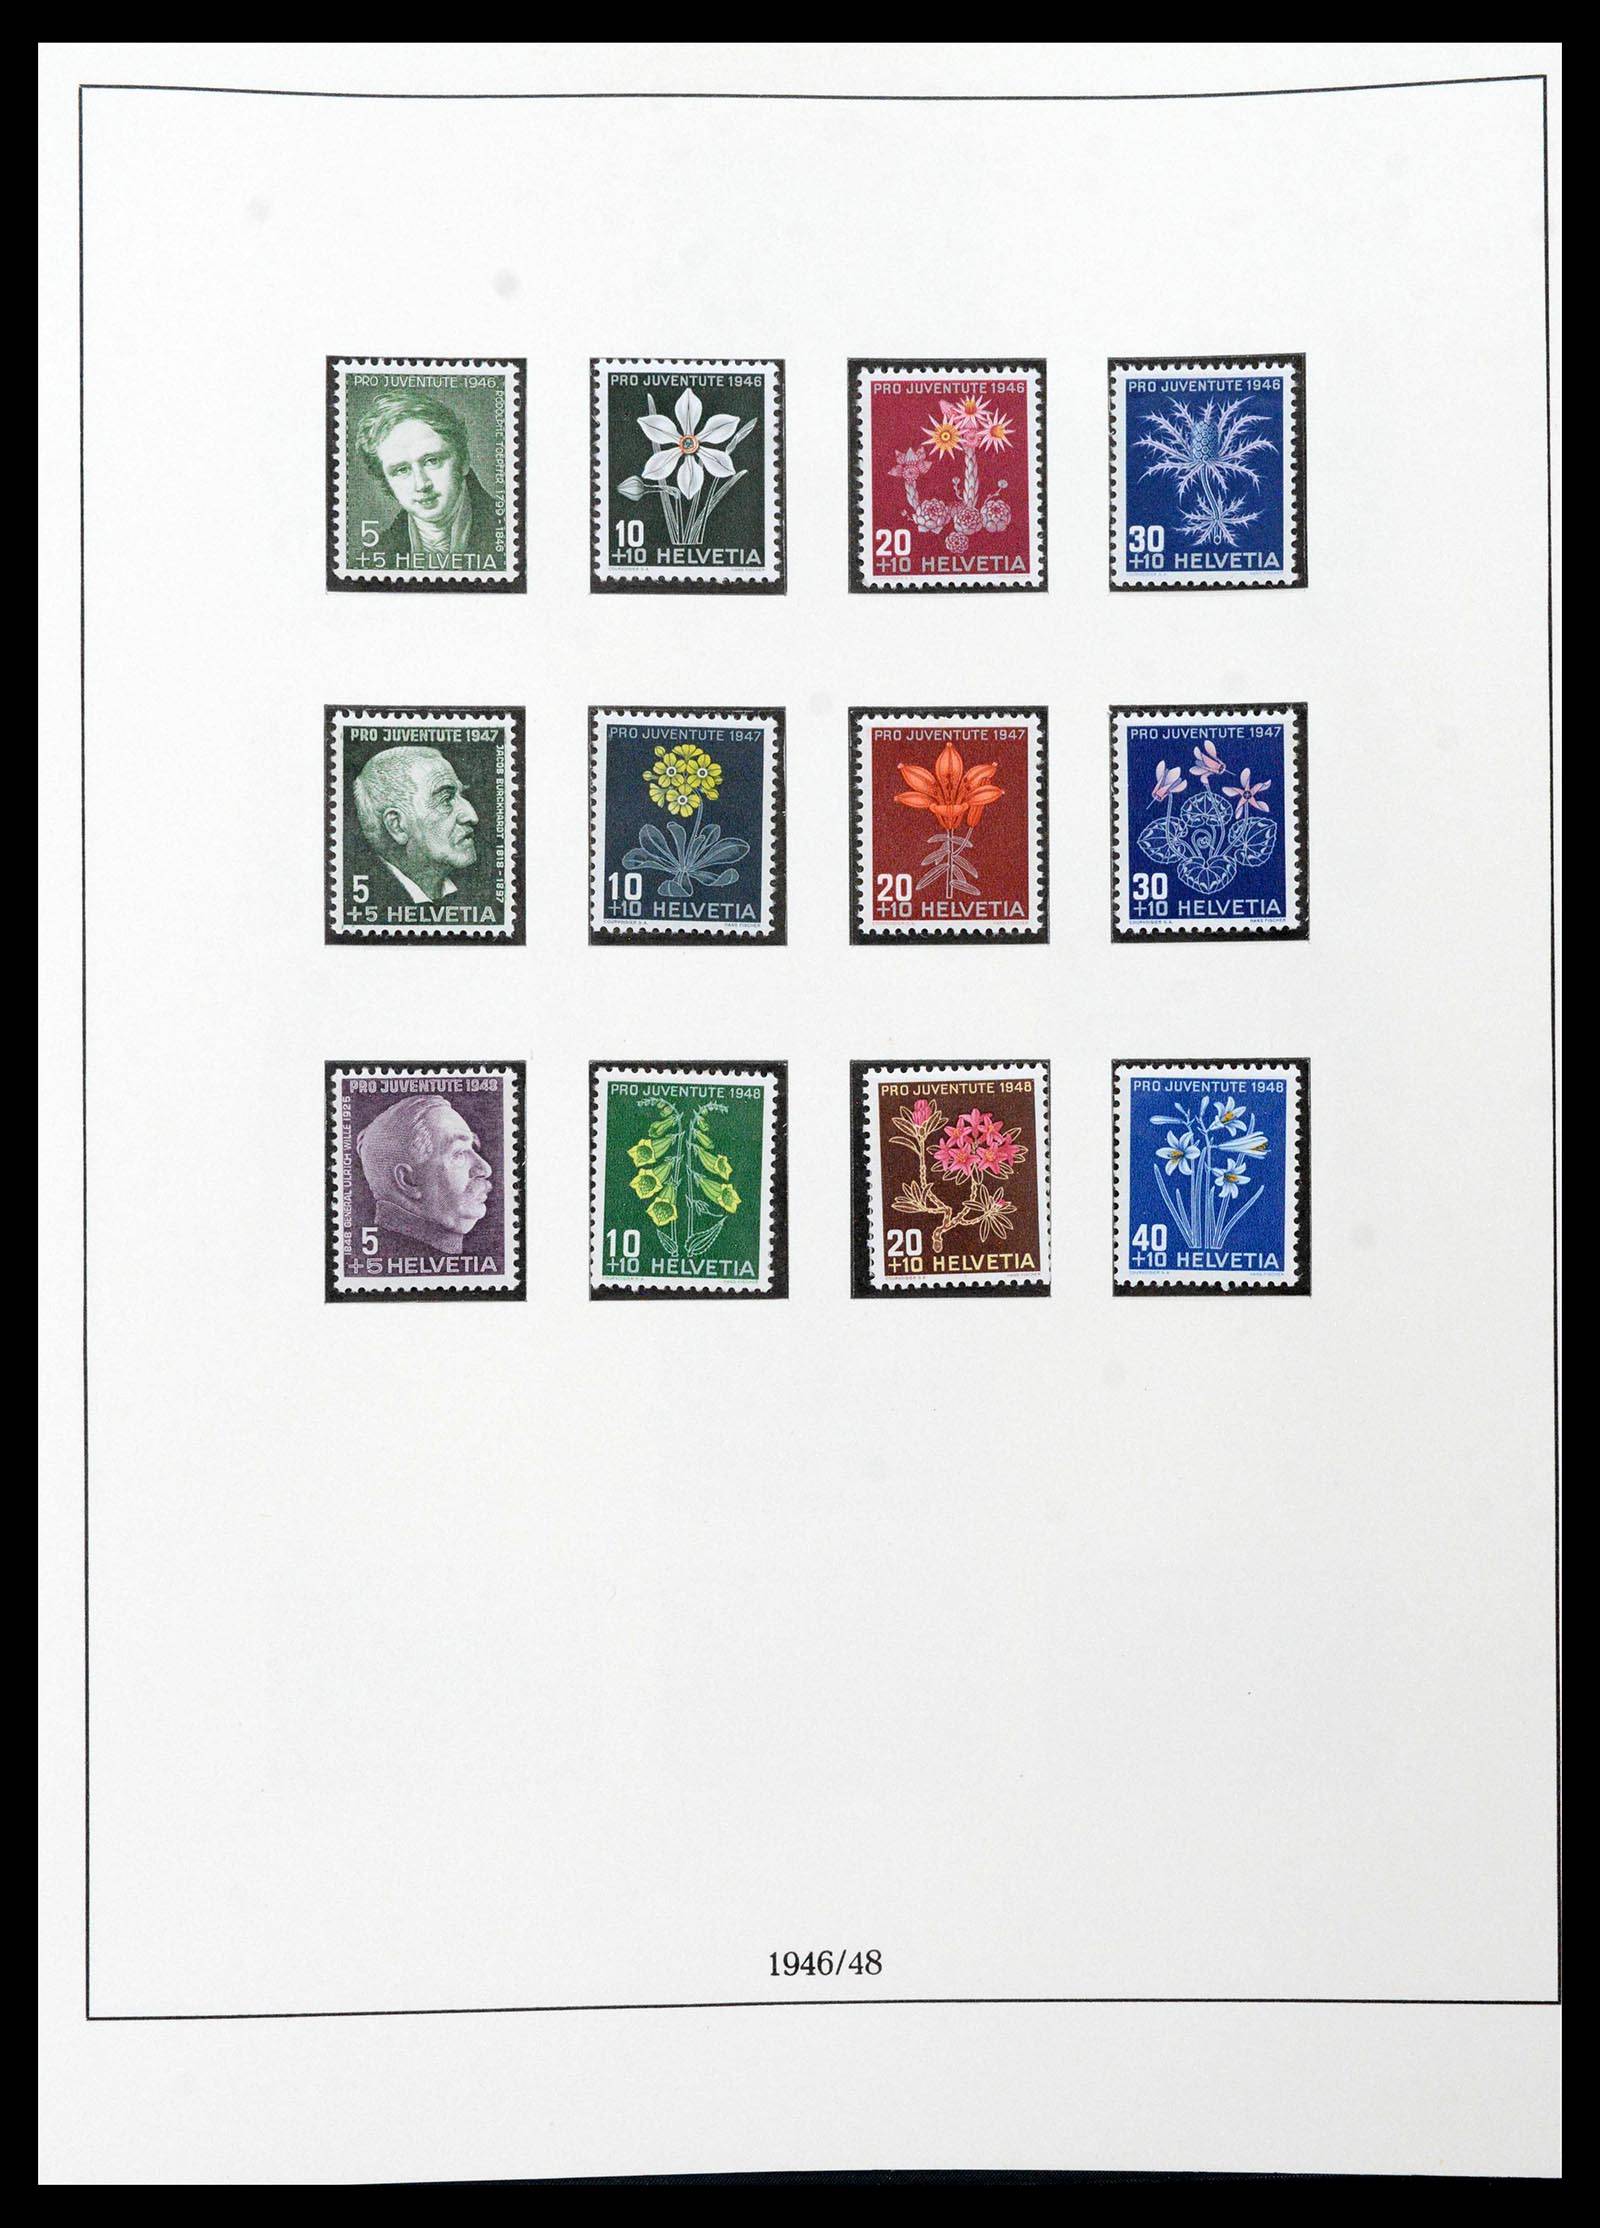 39235 0042 - Stamp collection 39235 Switzerland 1843-1960.